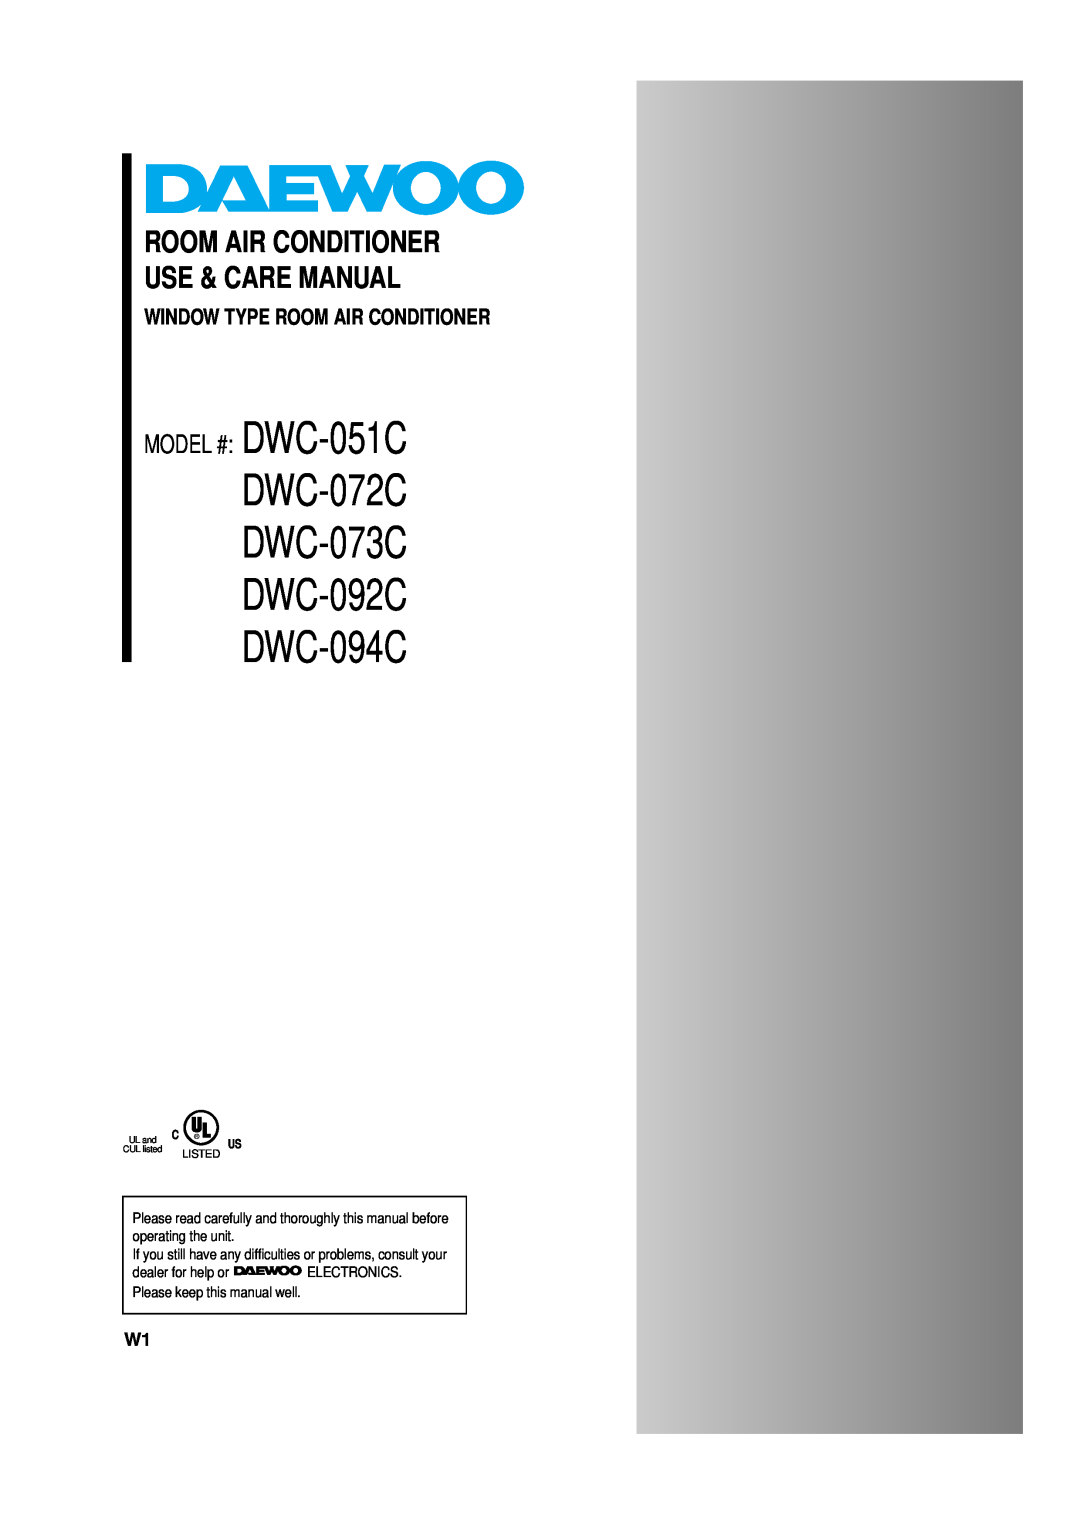 Daewoo manual Window Type Room Air Conditioner, DWC-072C DWC-073C DWC-092C DWC-094C, MODEL # DWC-051C 